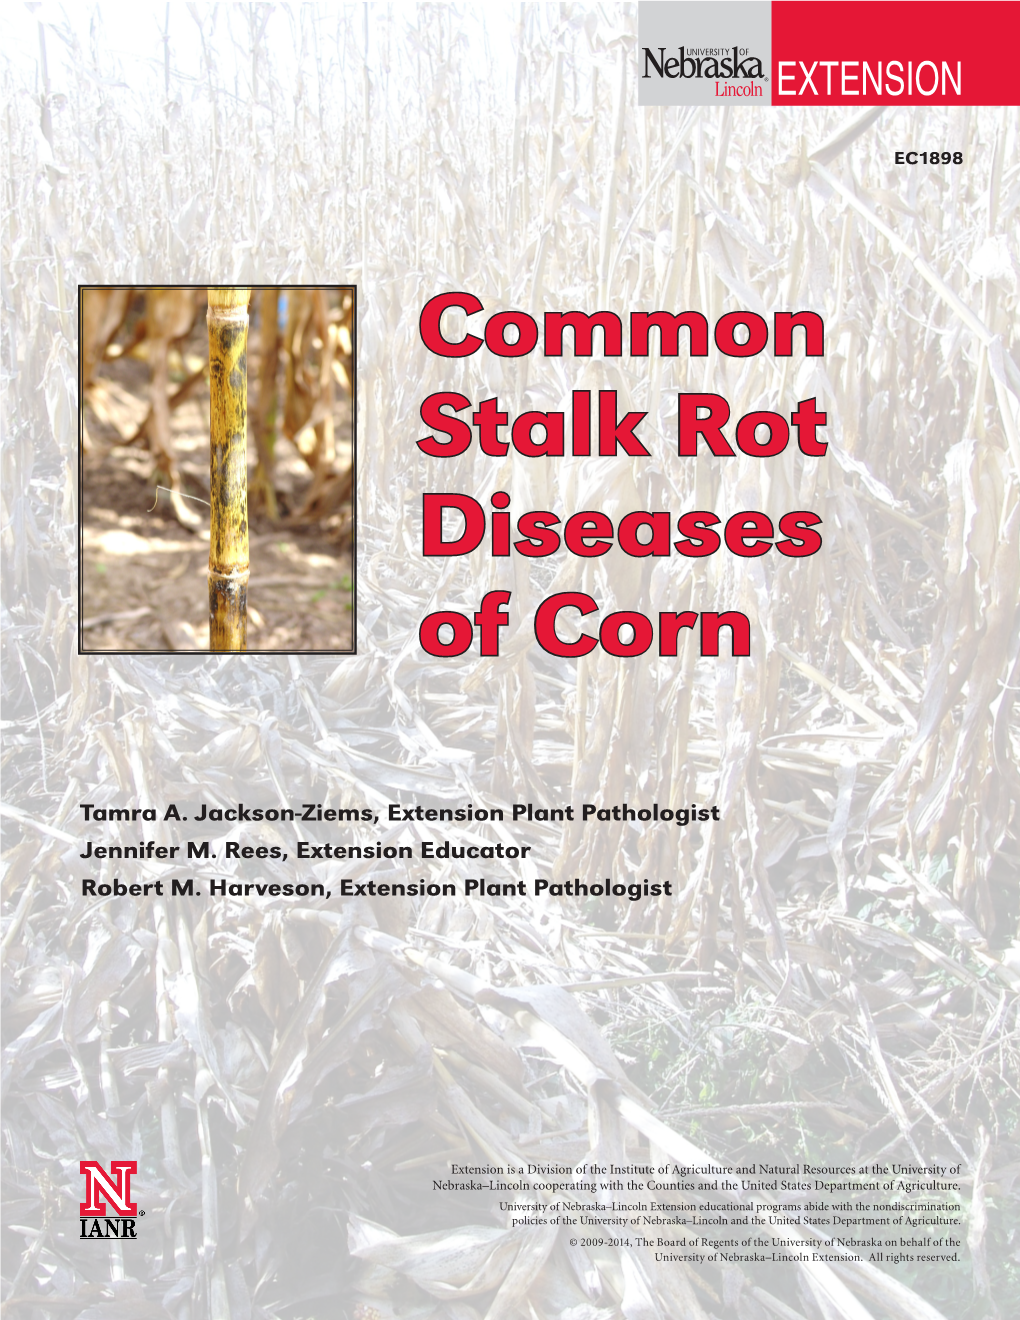 Common Stalk Rot Diseases of Corn